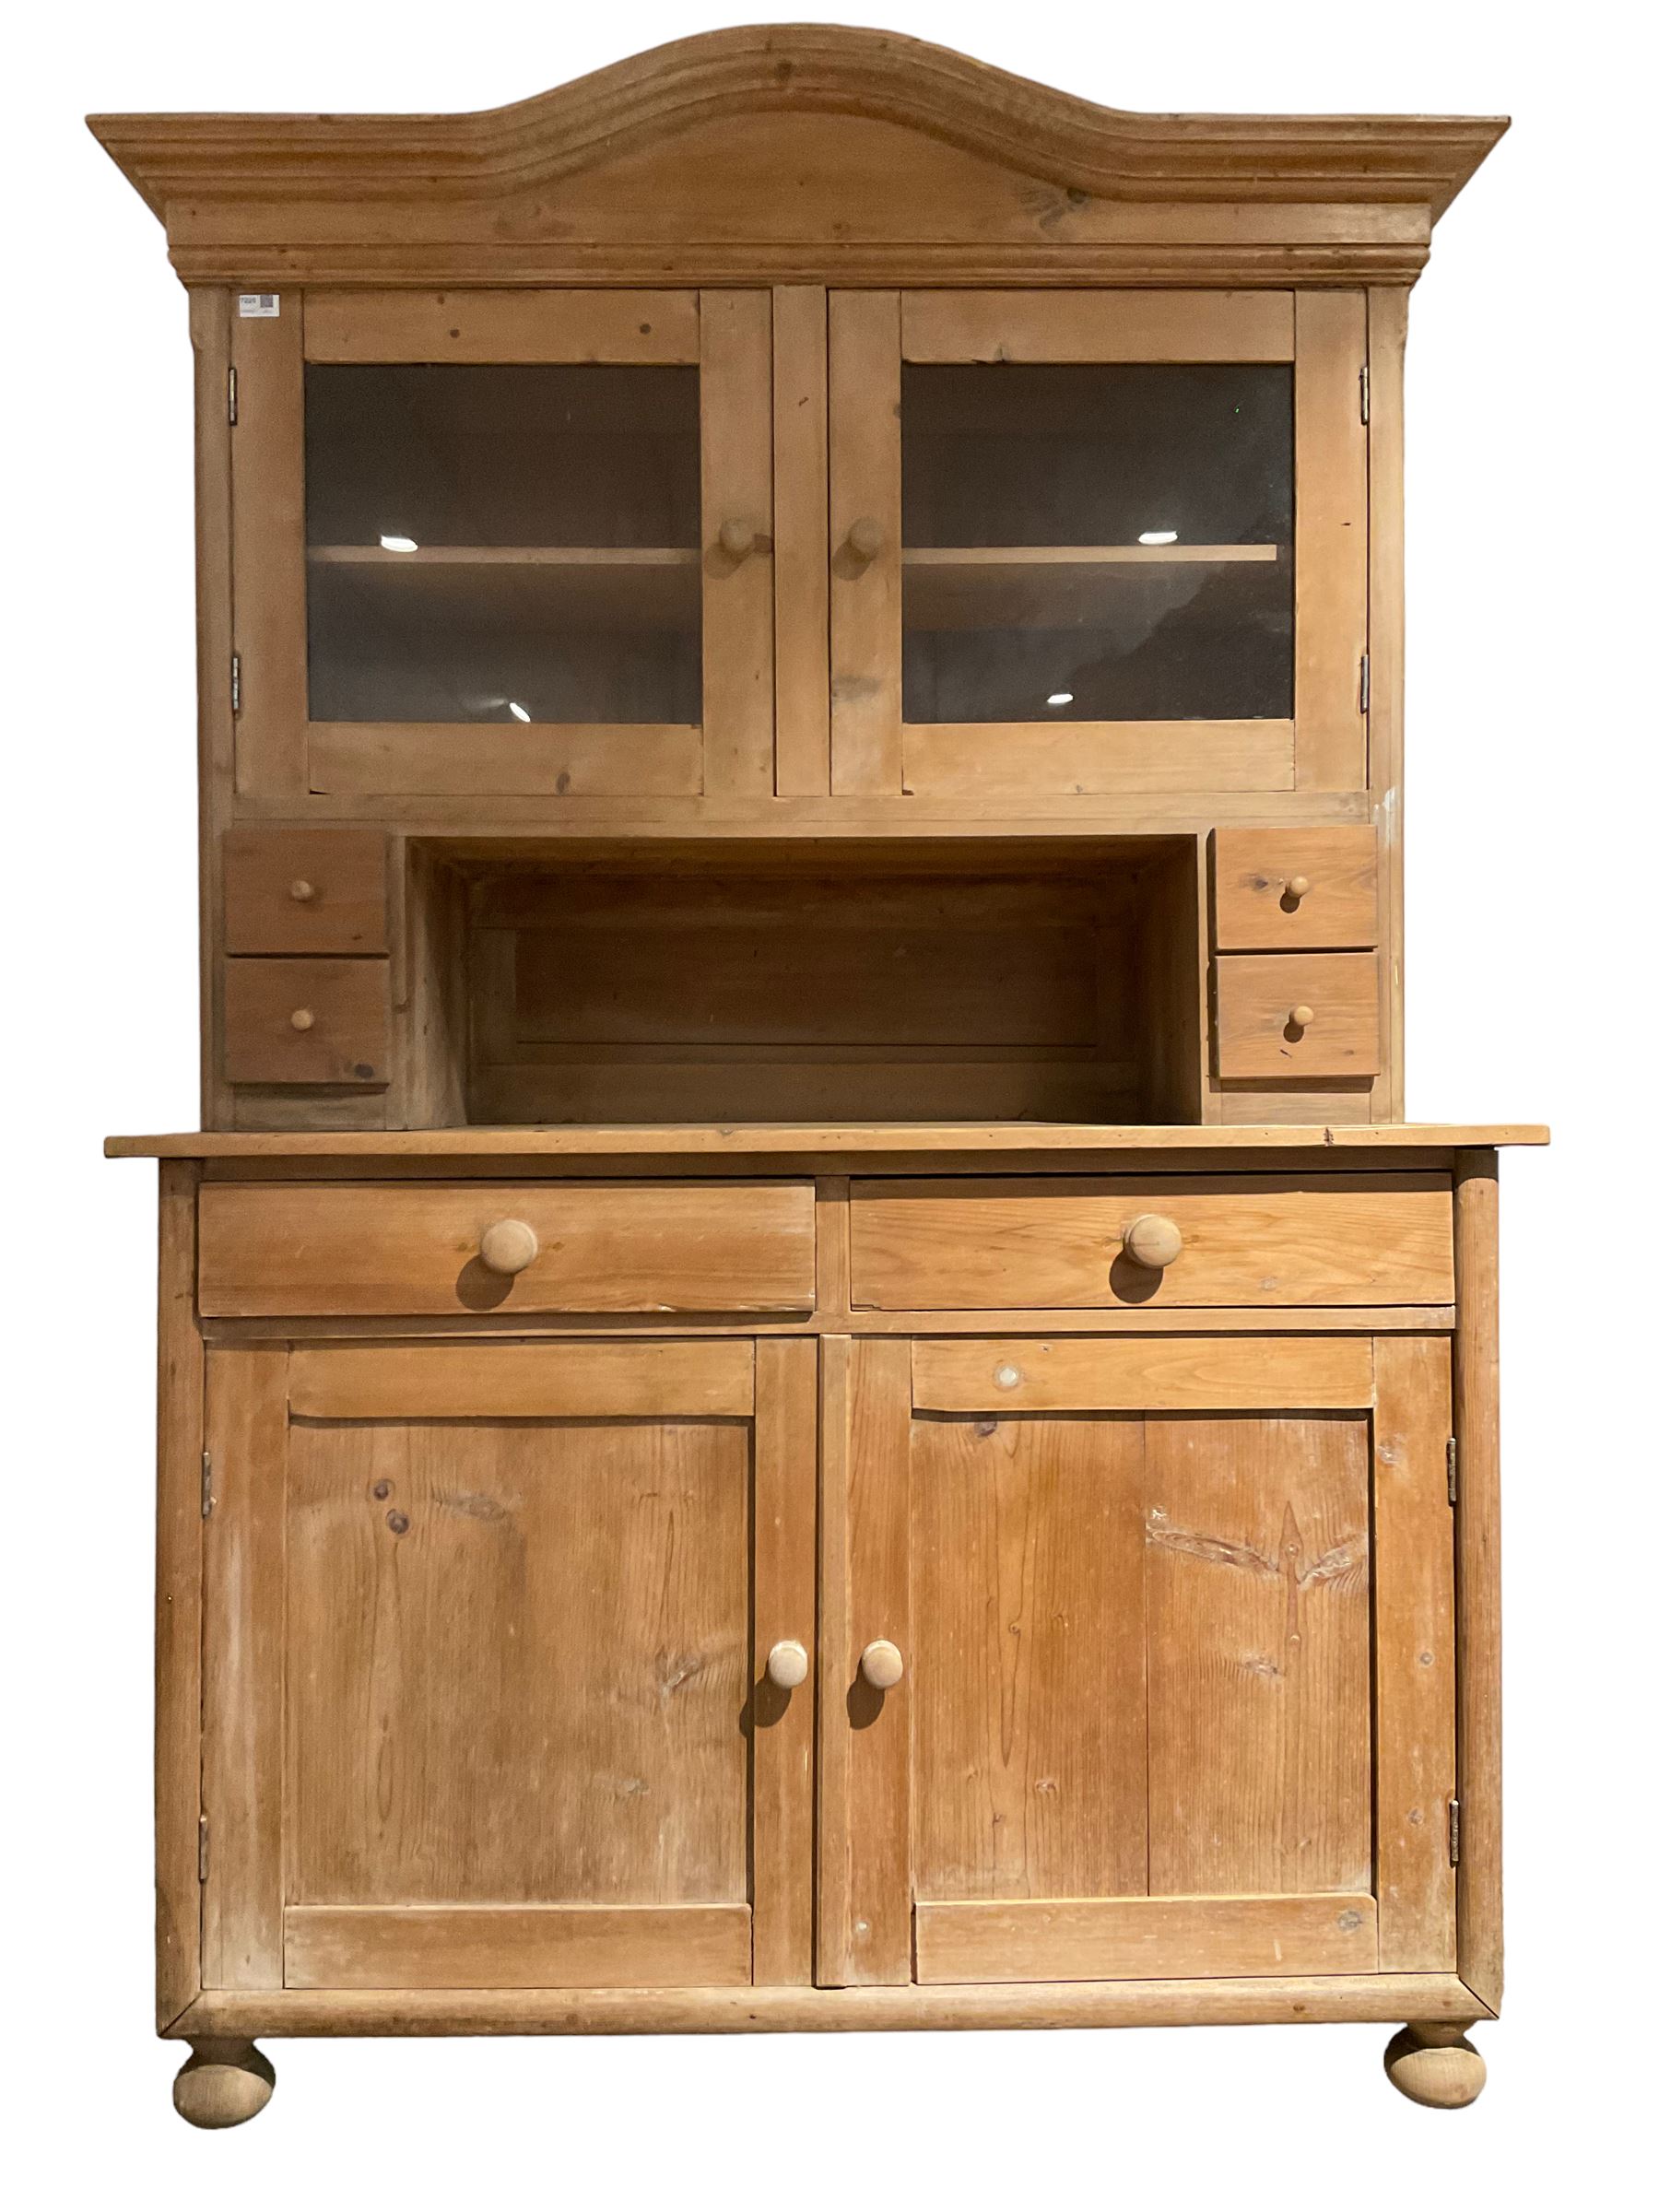 20th century pine dresser - Image 3 of 8